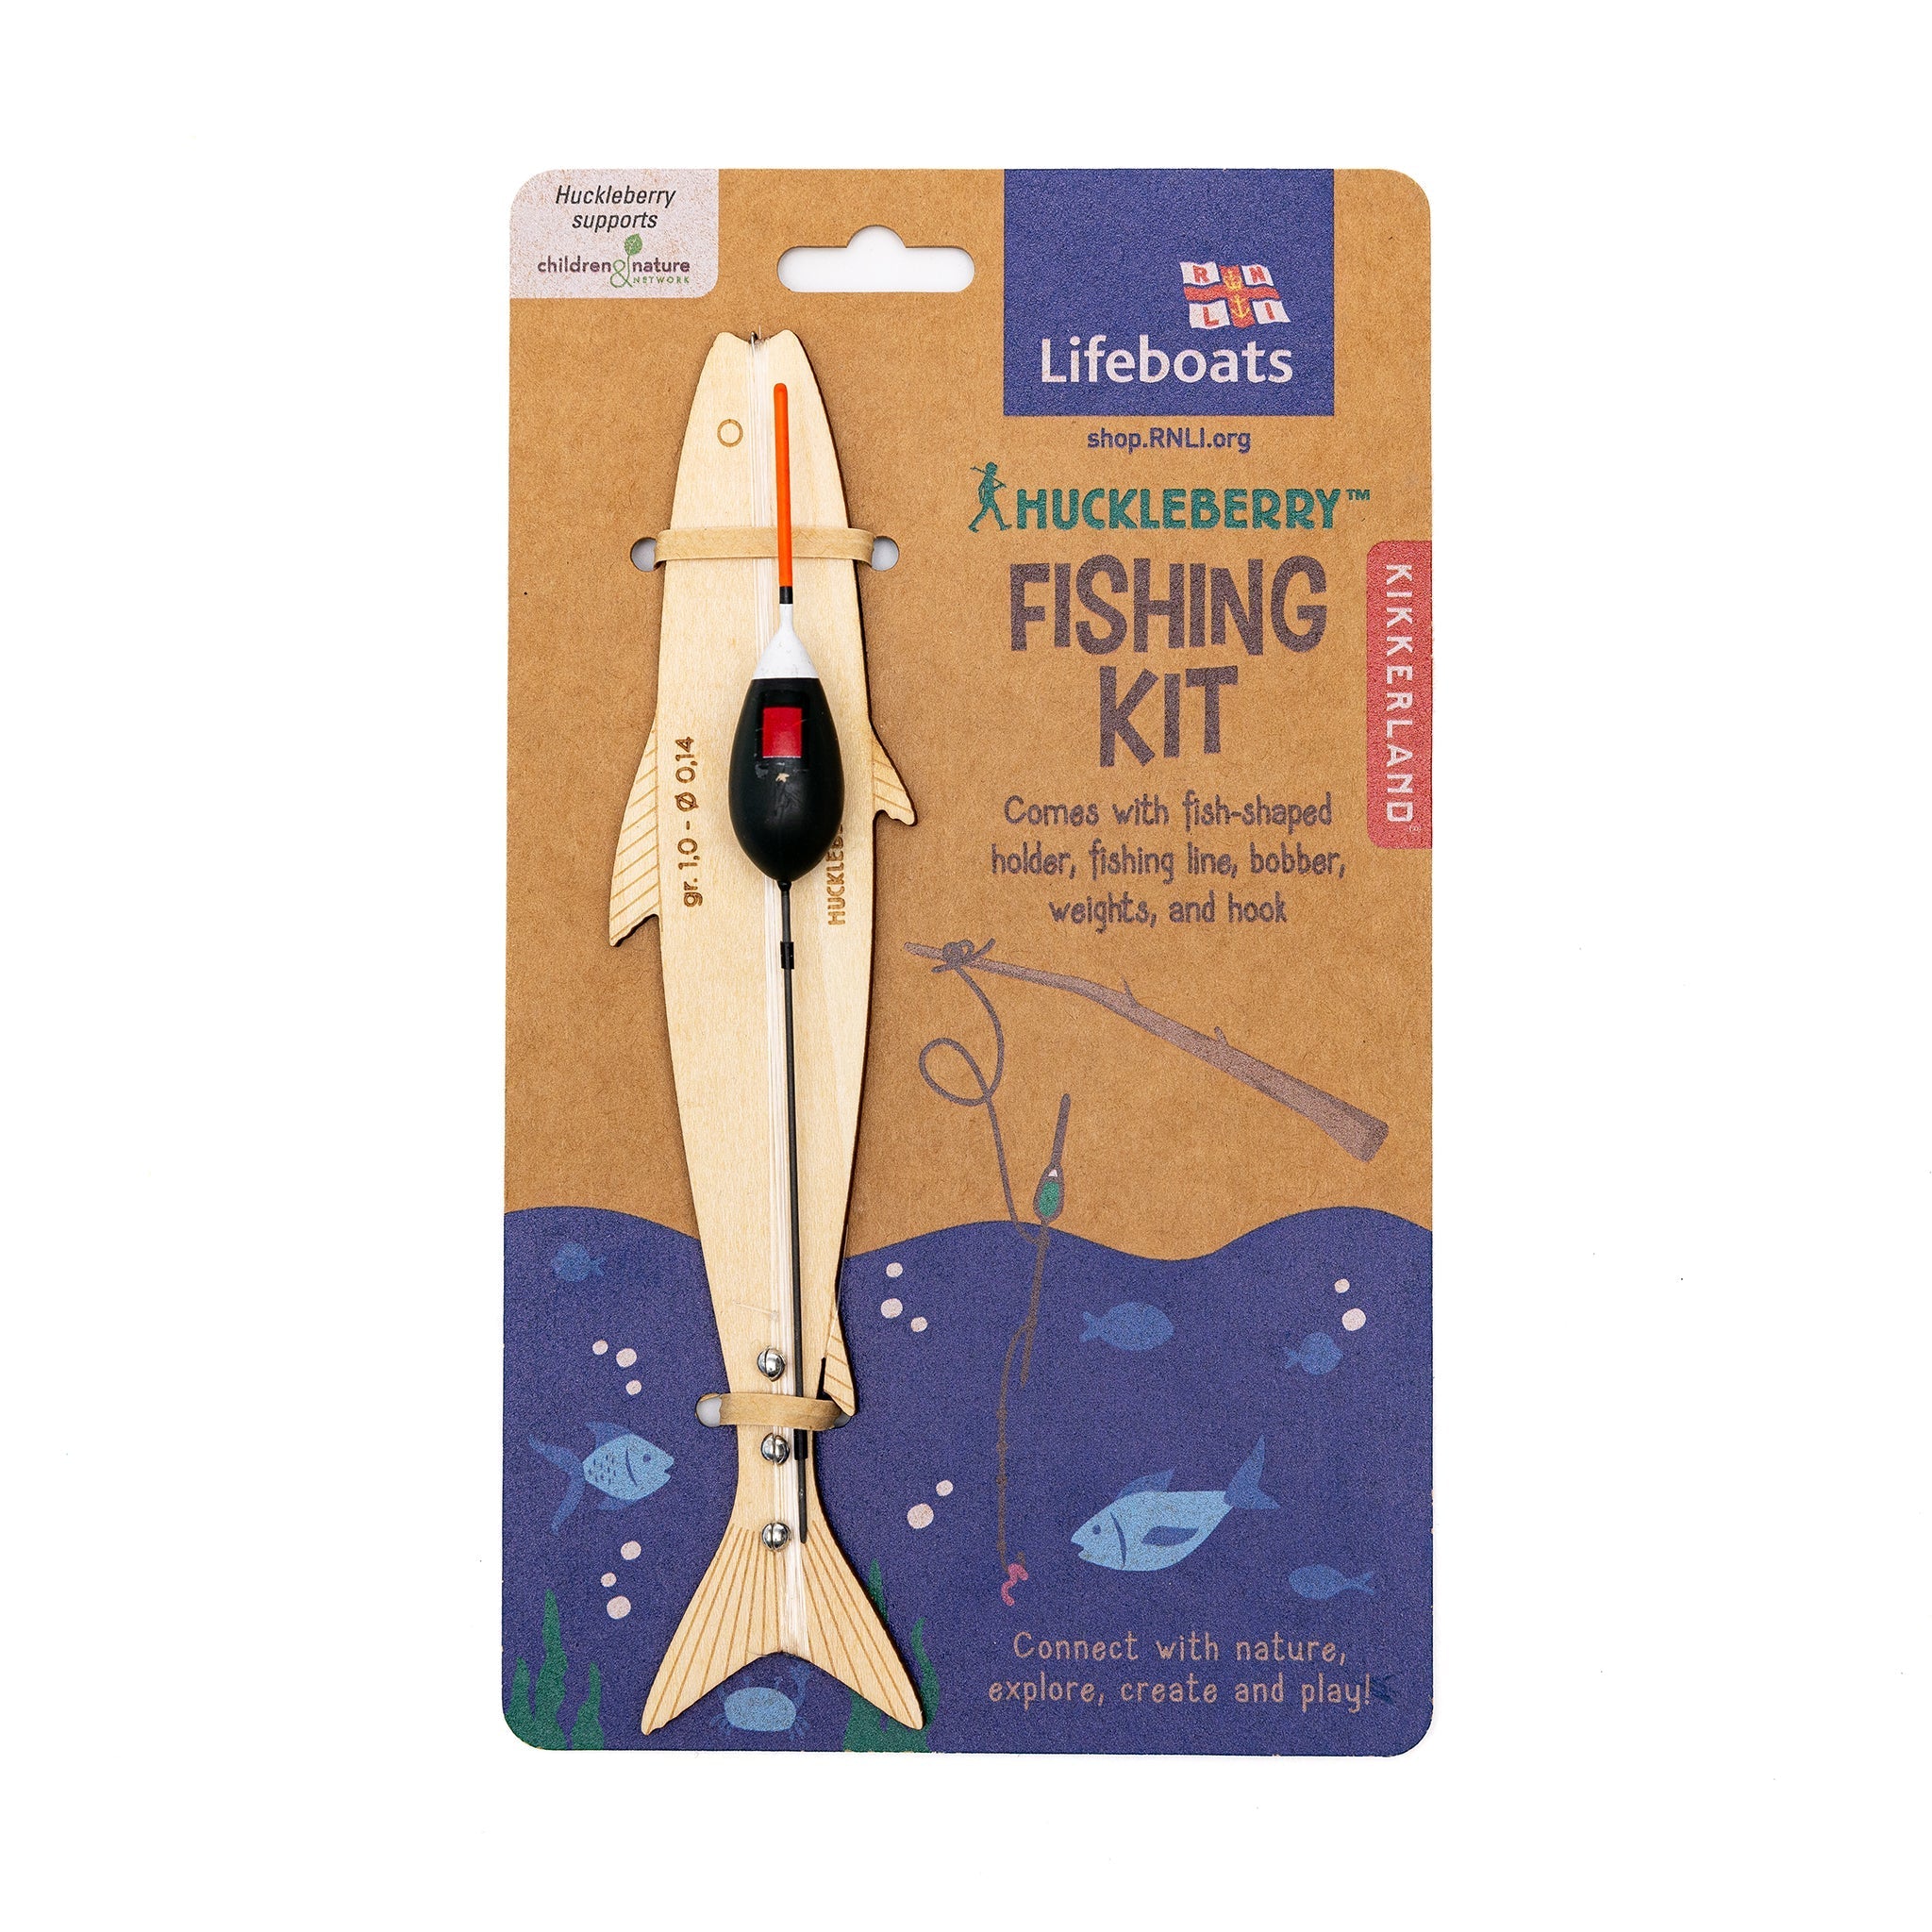 RNLI + Huckleberry Fishing Kit